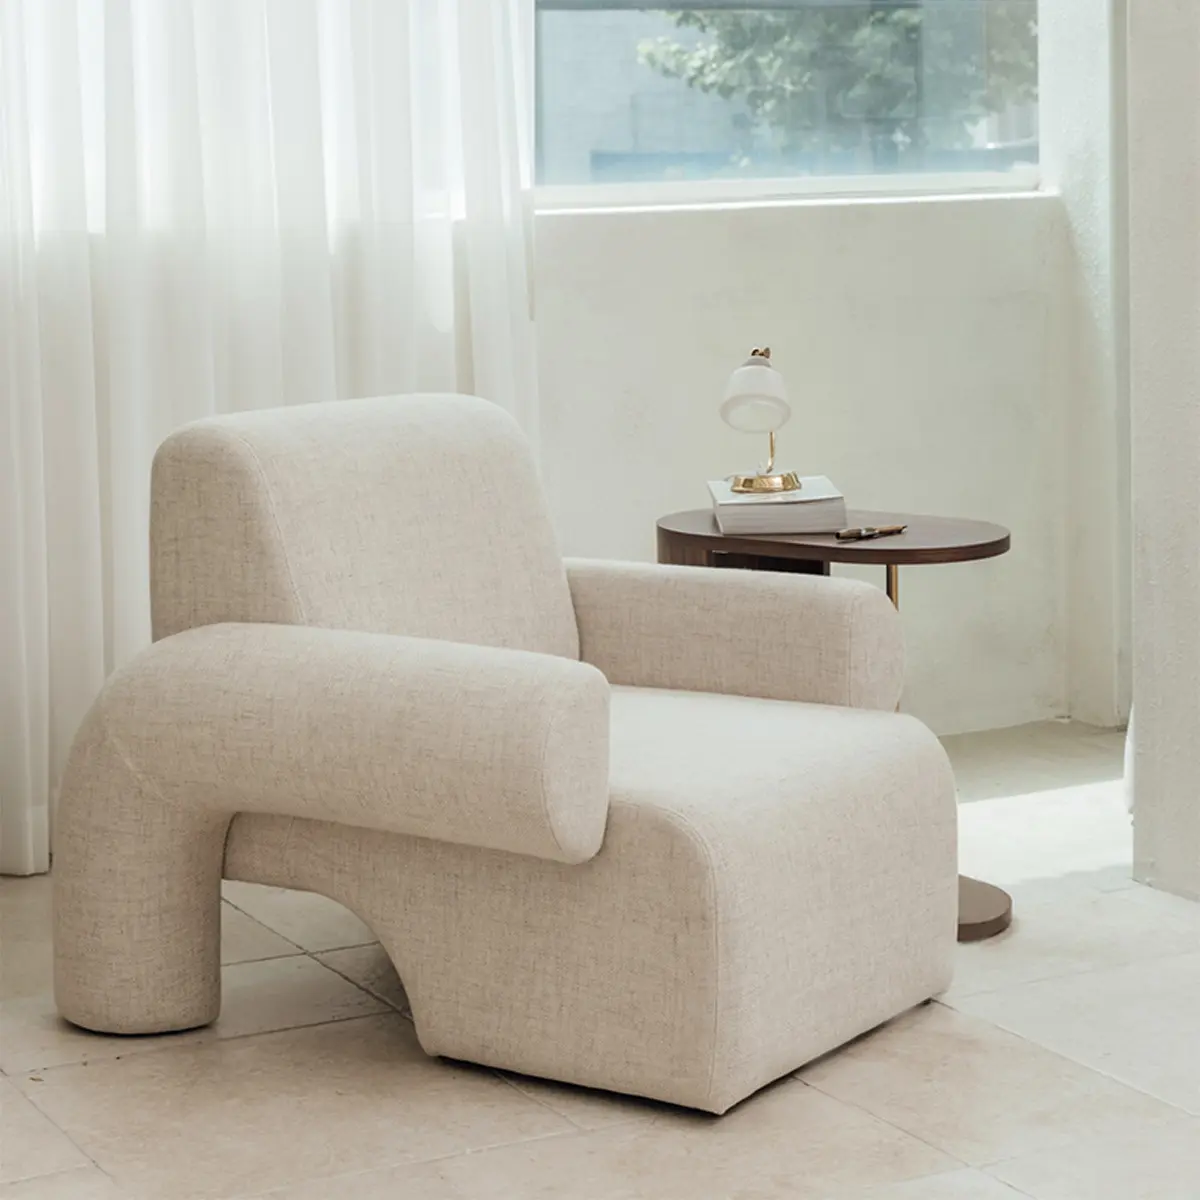 Dreamhause High Quality Popular Hot Sale Living Room Comfortable Curved Light Luxury Italia Leisure Single Sofa Chair Designer